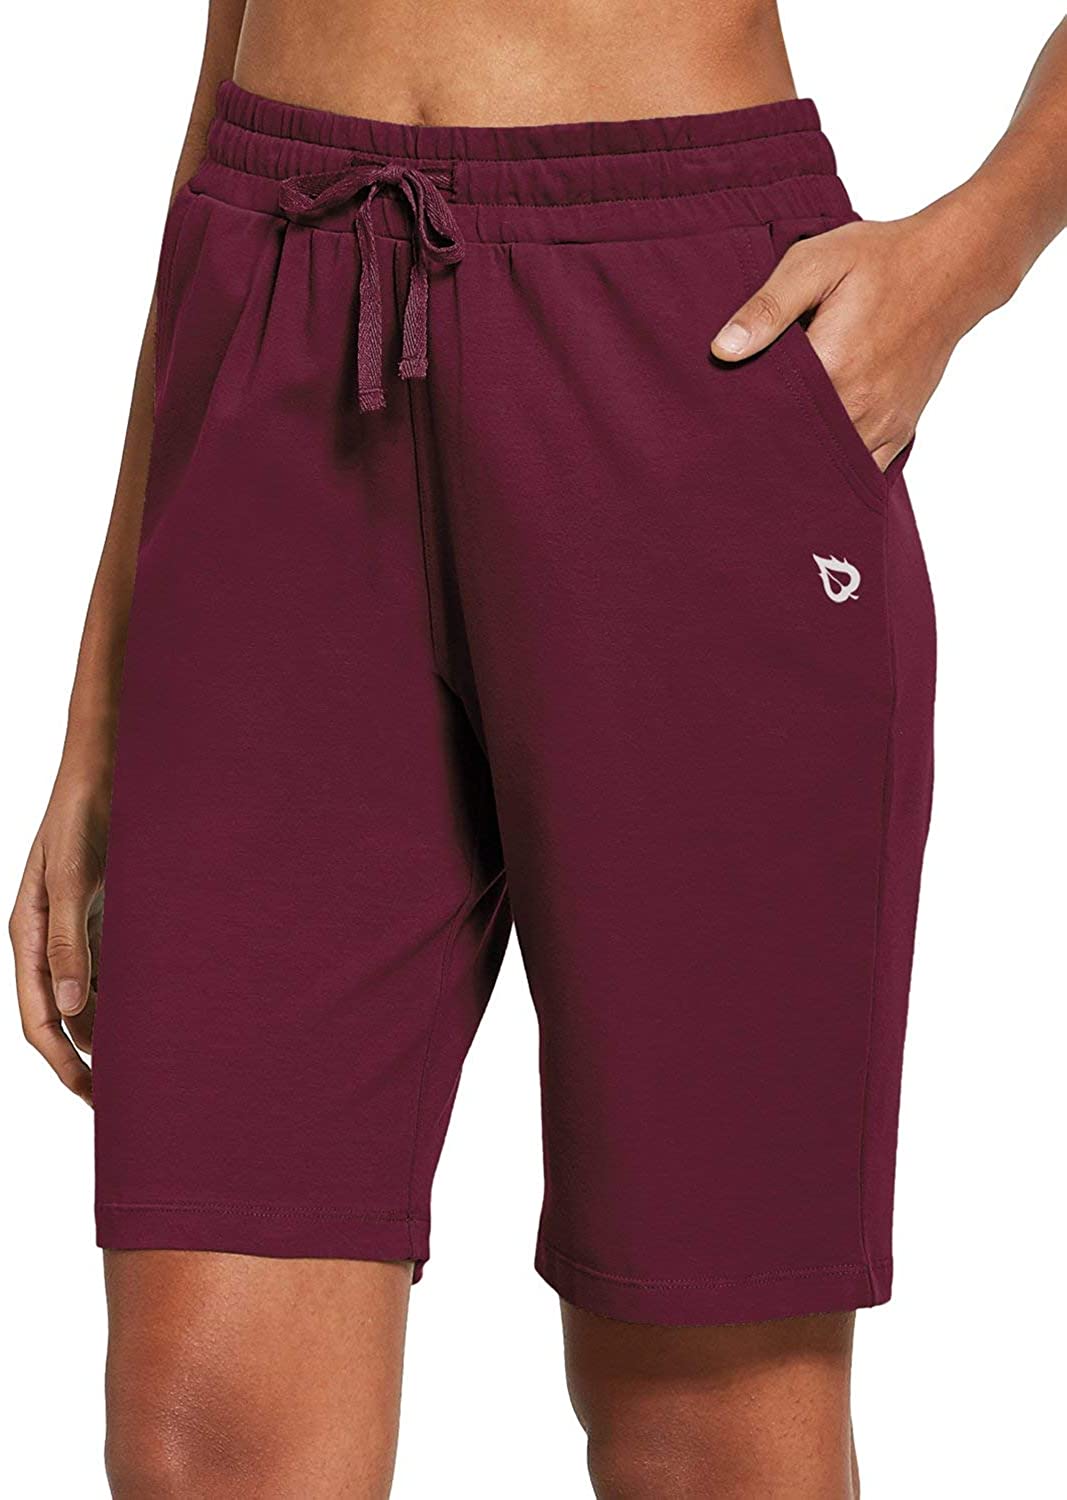 BALEAF Women's Bermuda Shorts Cotton Long Shorts with Pockets